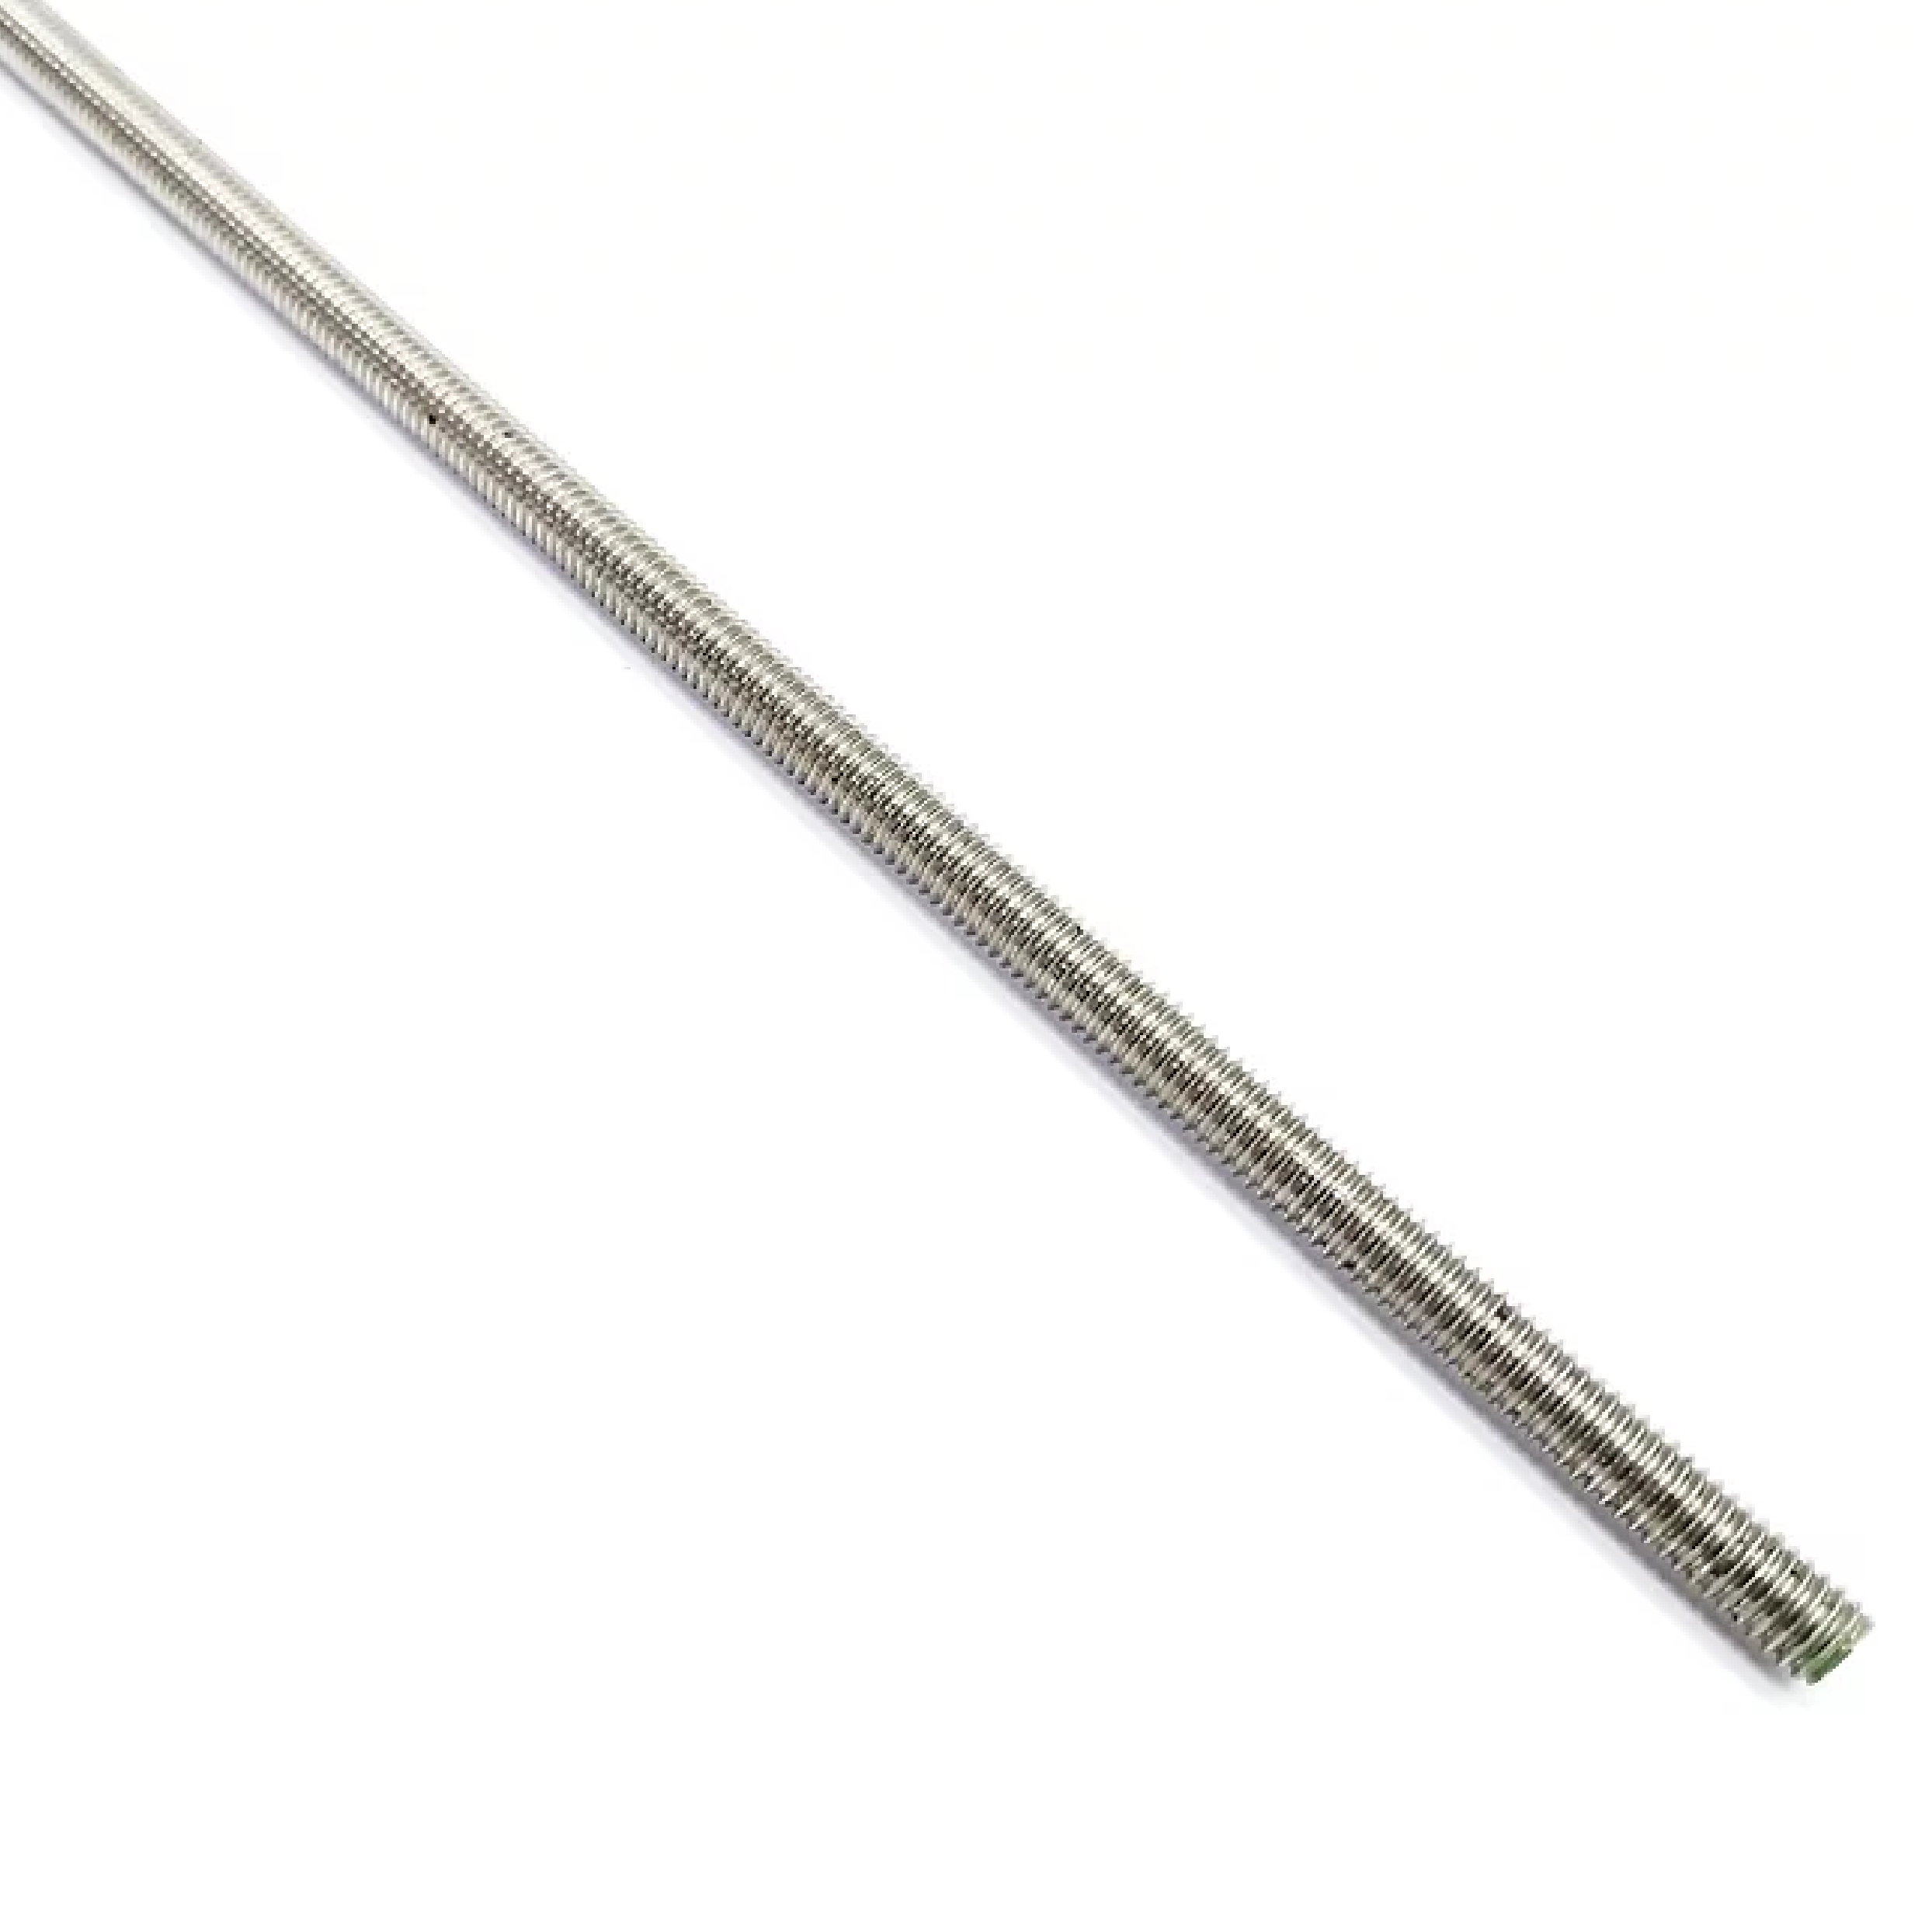 Stainless Steel SUS304 Threaded Rod (METRIC MM) 2M Length